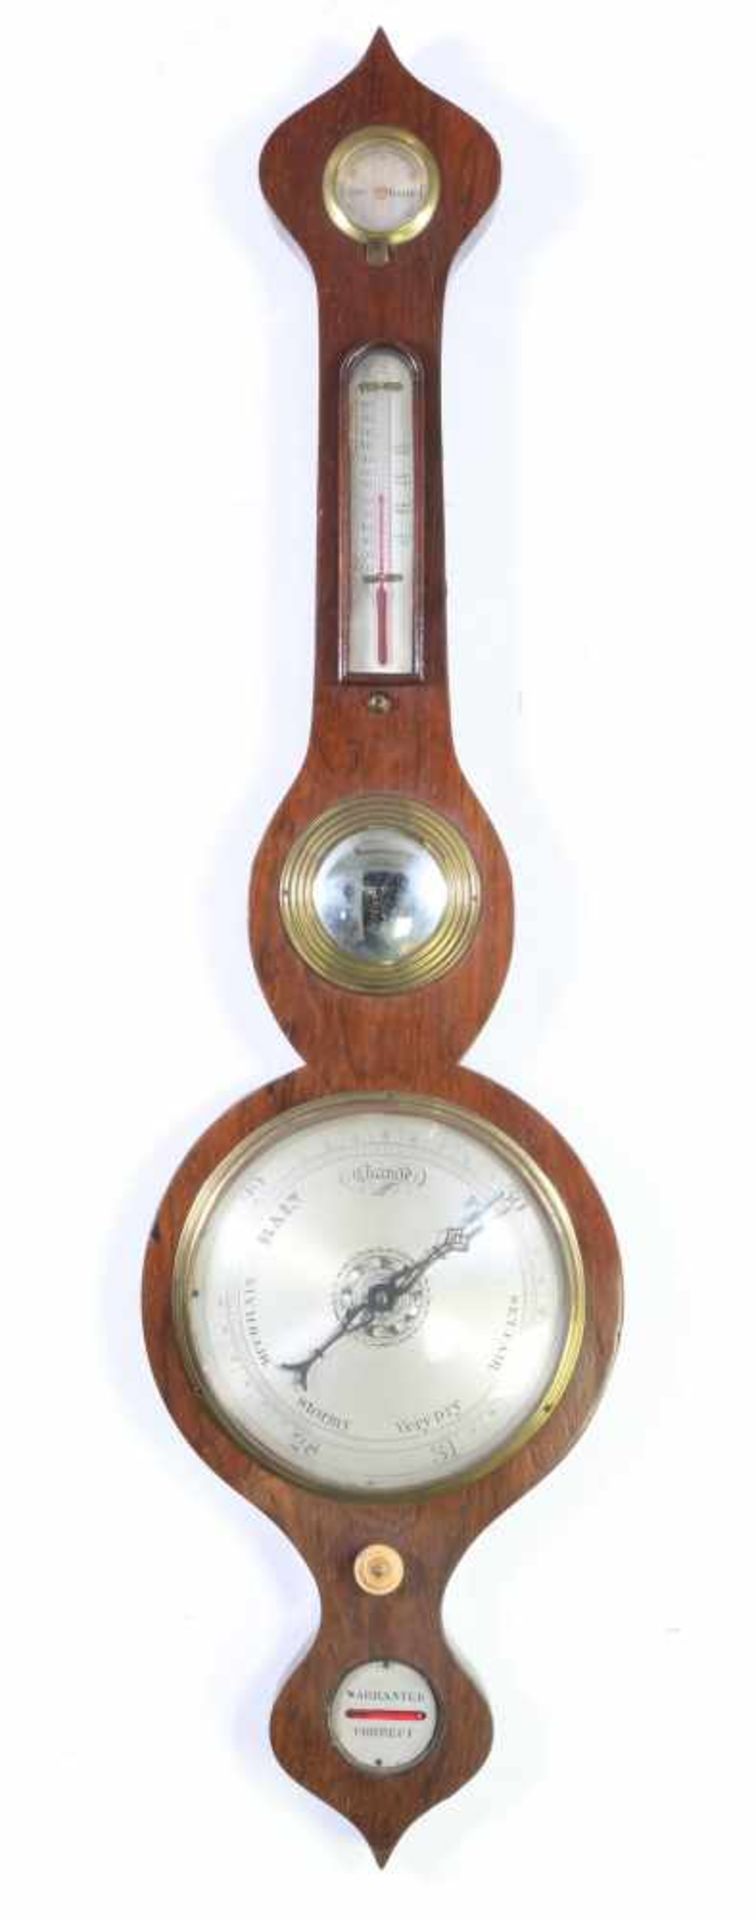 Engeland, twee banjo barometers;verzilverde schaalplaten, één gesigneerd W. Spray, Crowhurst. Ca. - Bild 2 aus 2